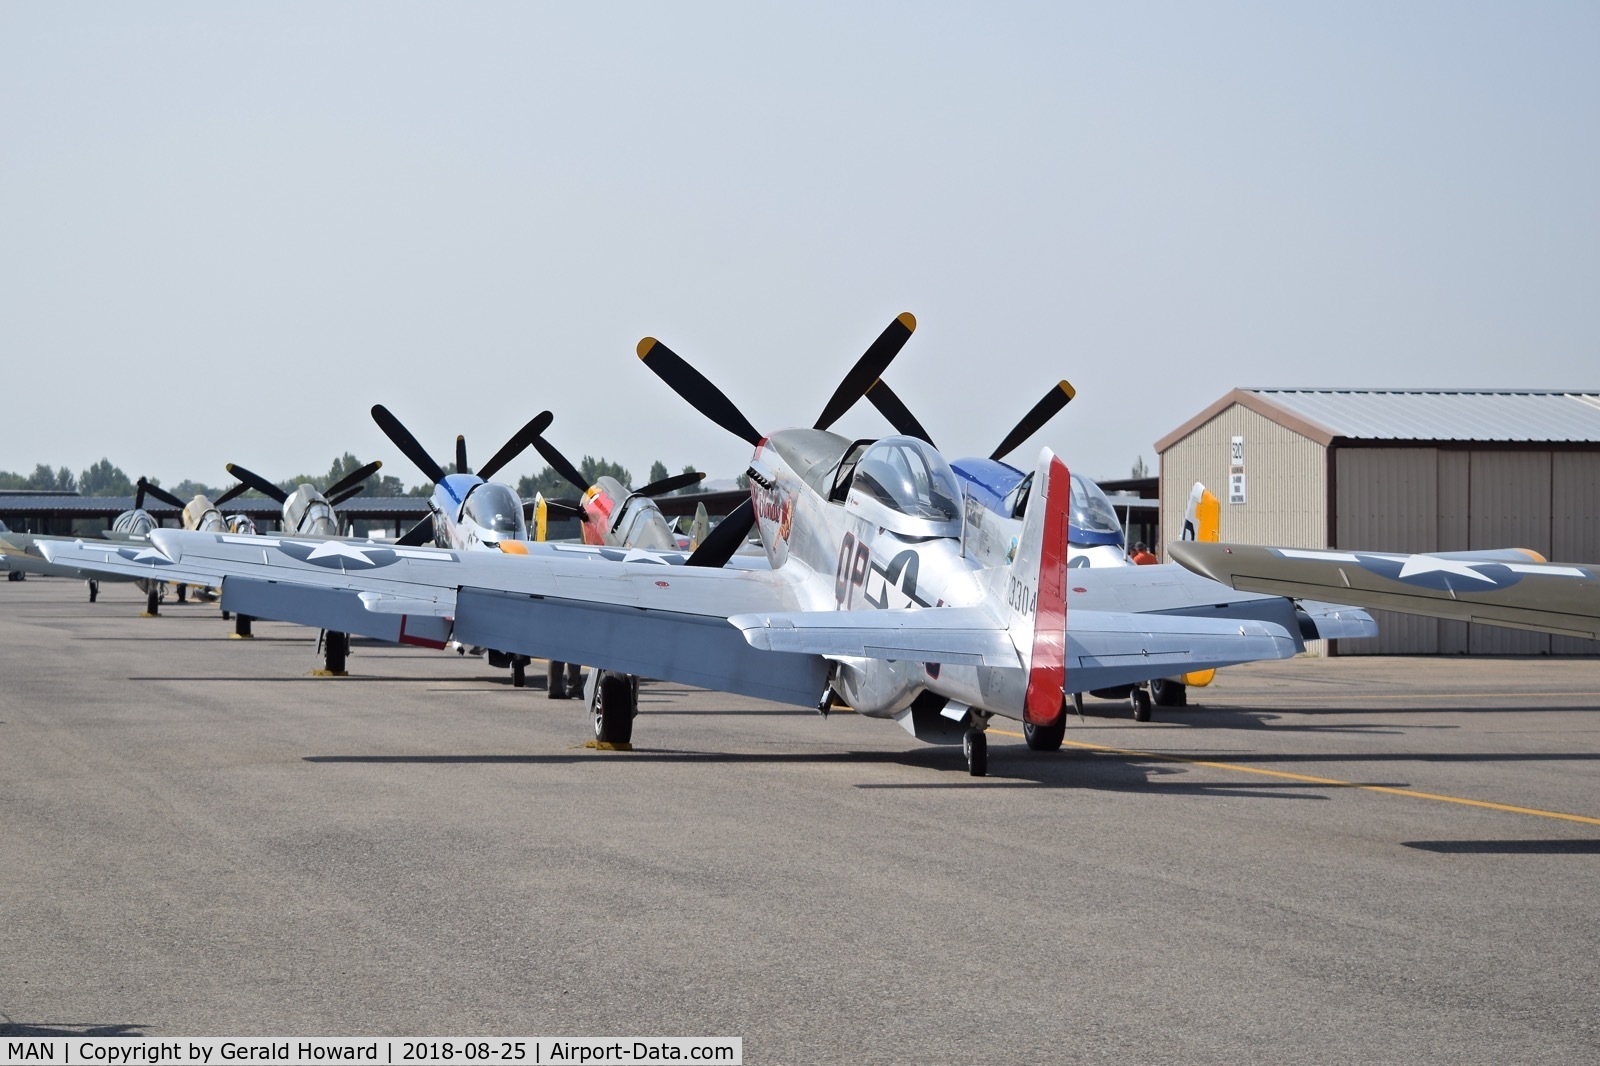 Nampa Municipal Airport (MAN) - P-51 & P-40 aircraft parked on airshow ramp.